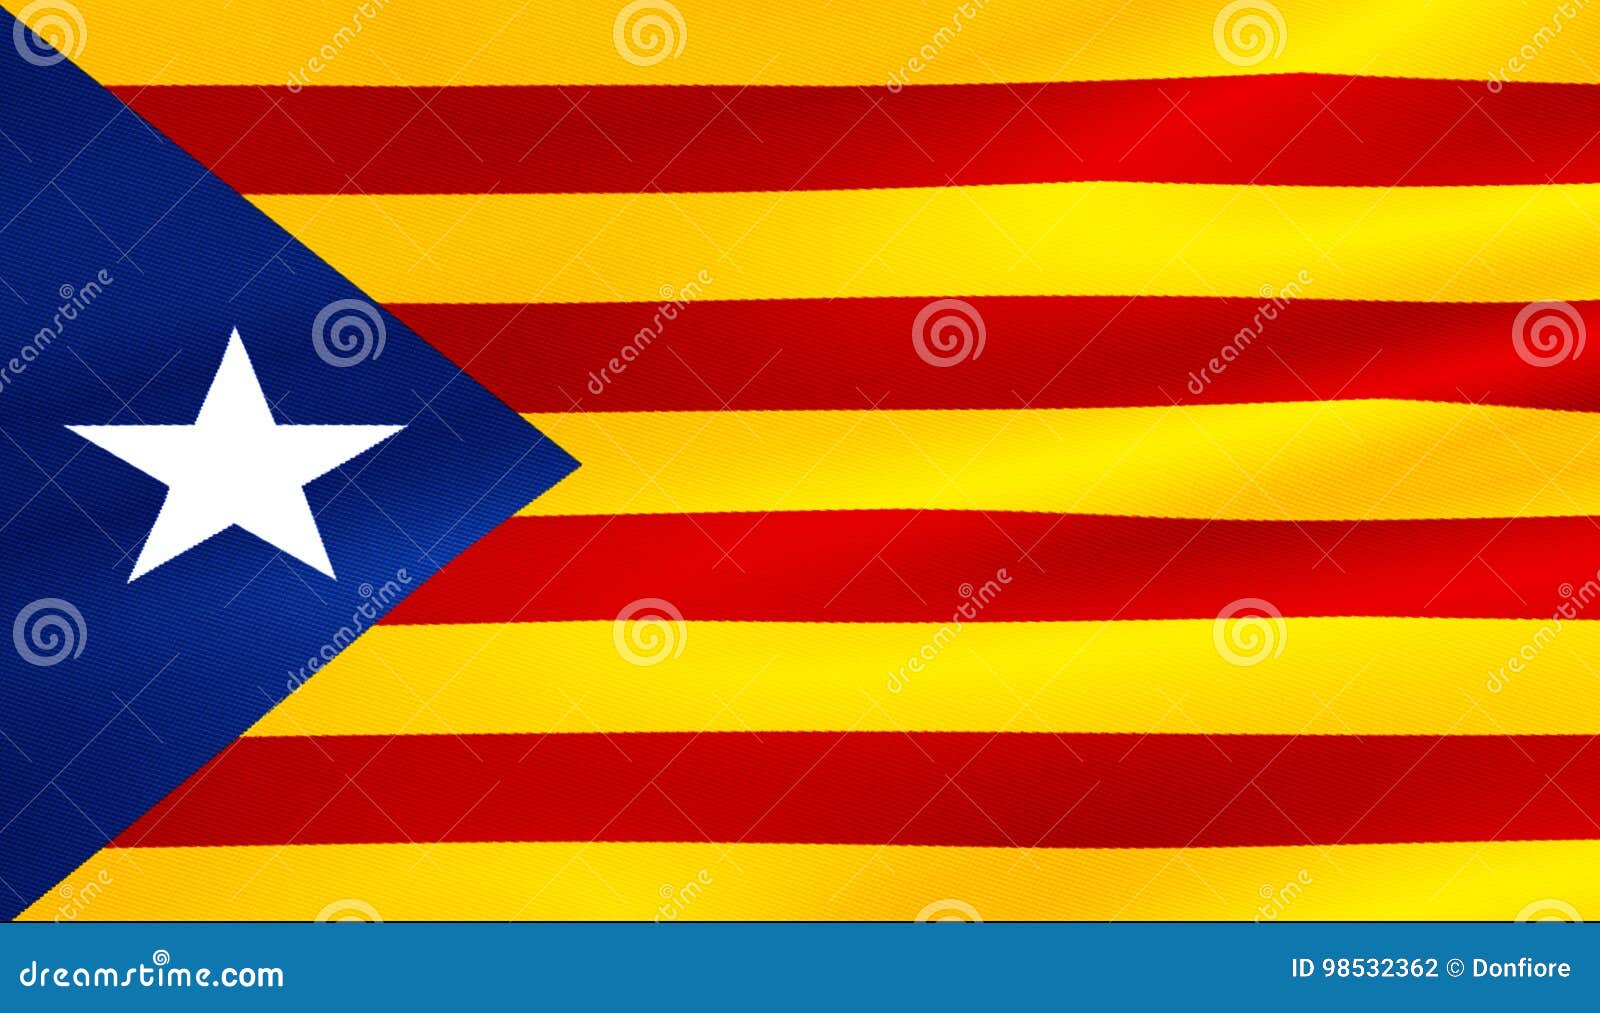 Флаг синий оранжевый желтый. Флаг Каталонии. Флаг с желтыми полосками. Флаг какаталонии со звездой. Жёлтый флаг с красными полосками.